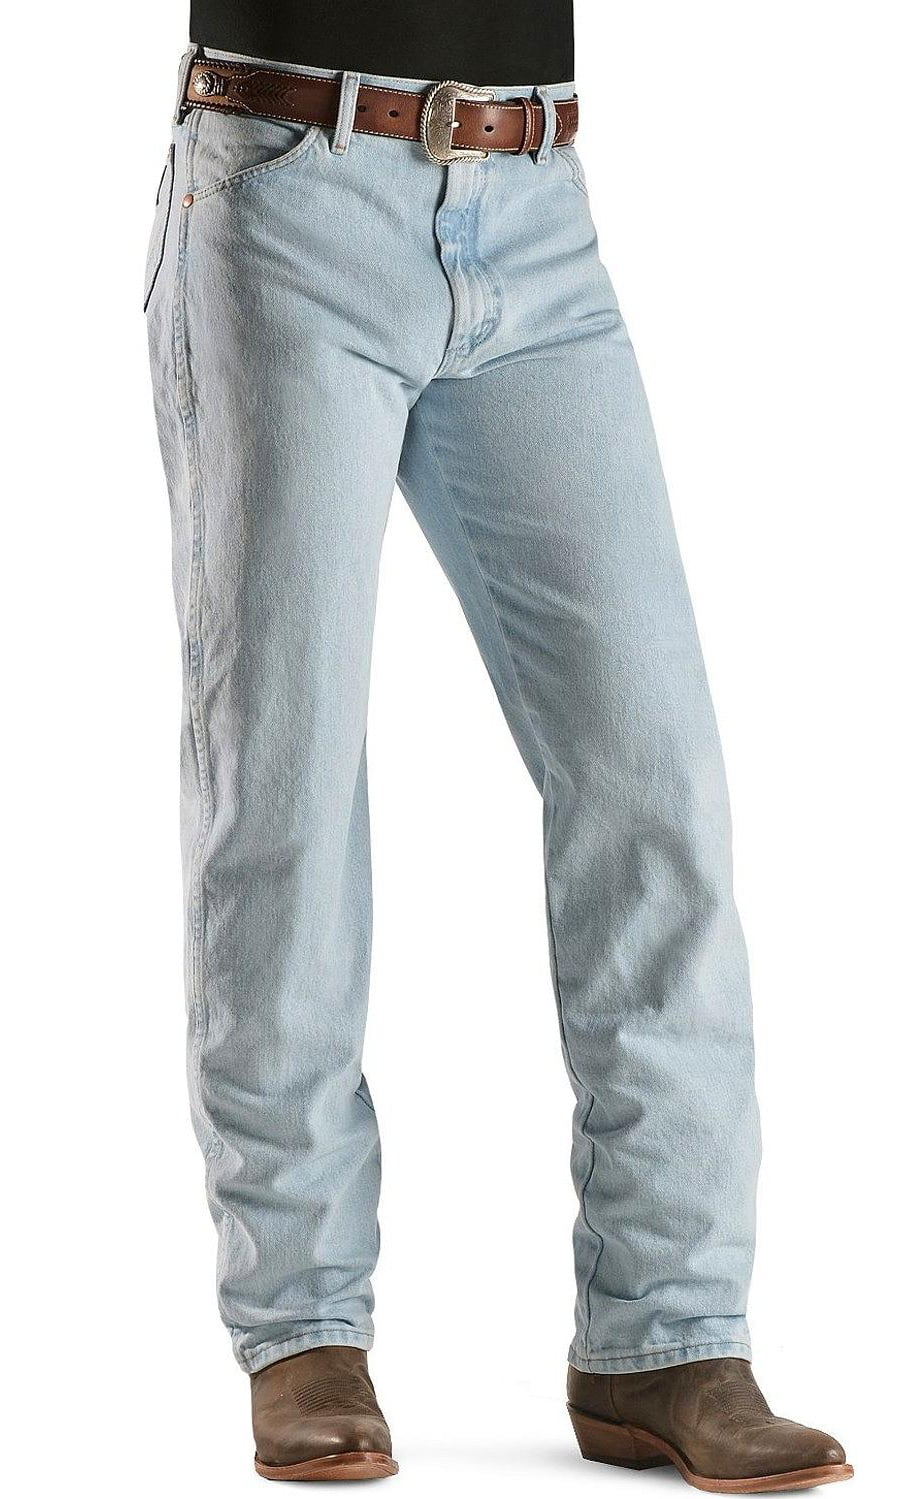 wrangler men's jeans 13mwz original fit premium wash reg - 13mwzro_x5 -  